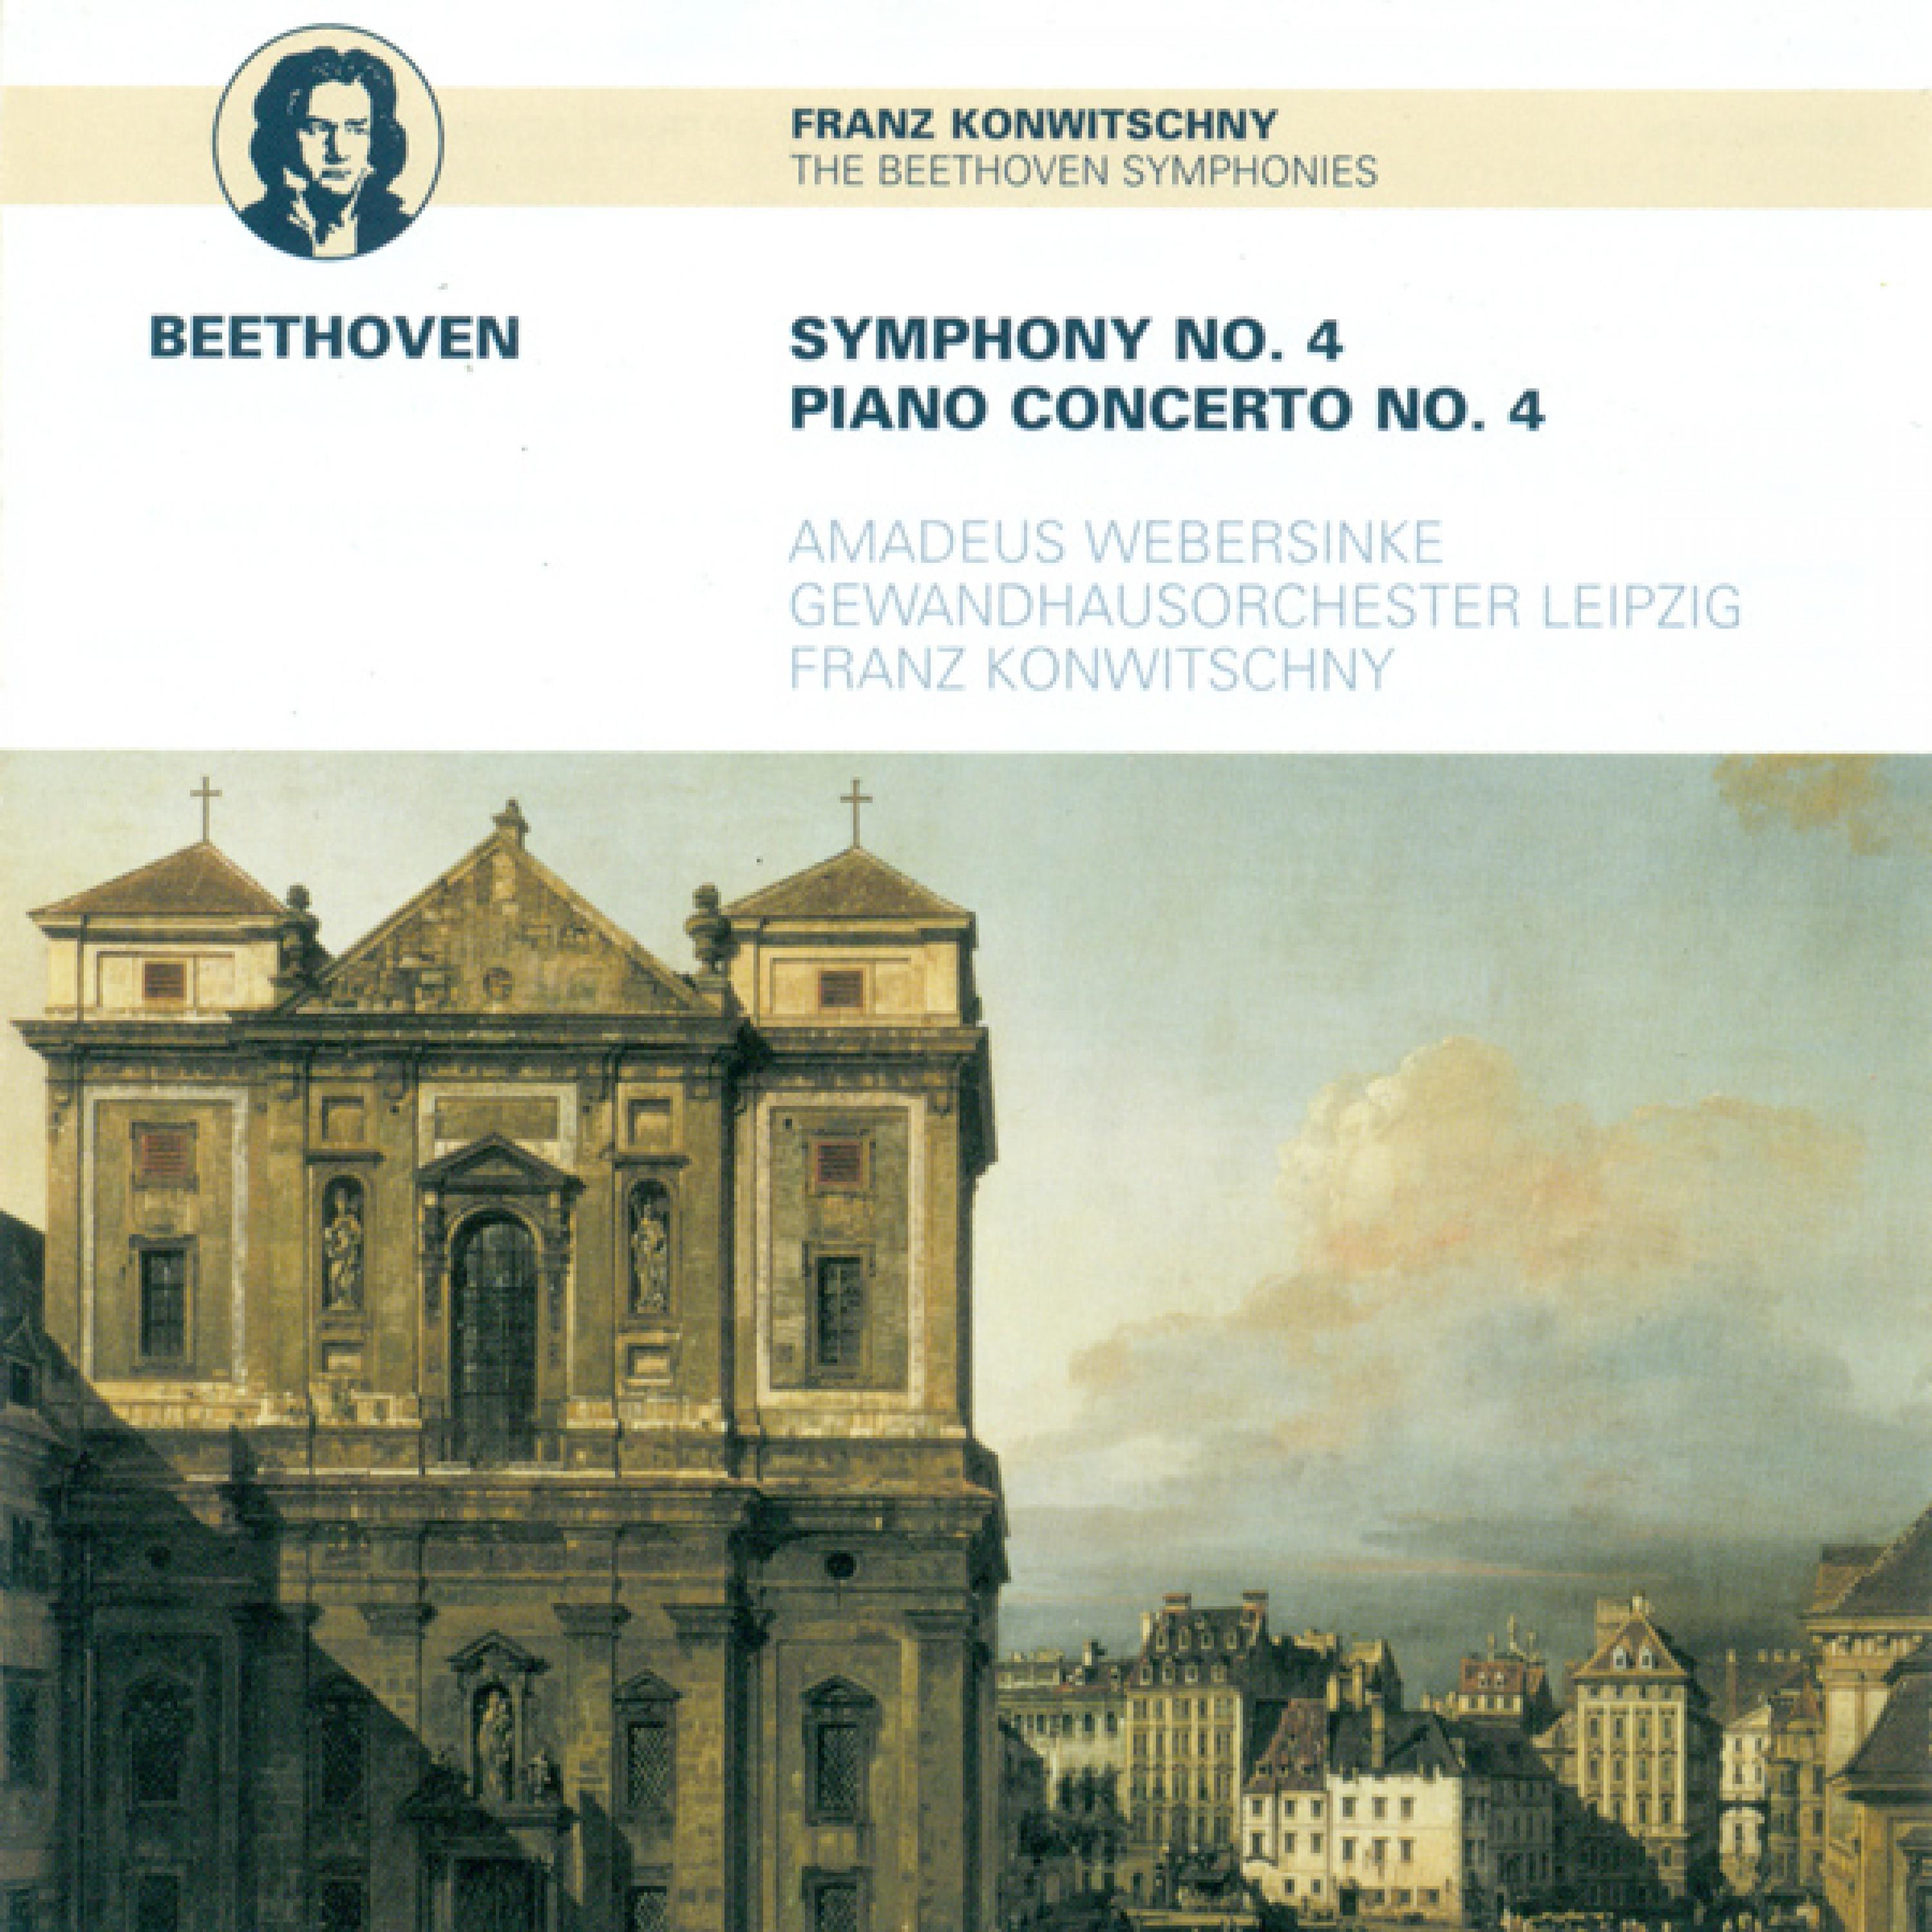 BEETHOVEN, L. Van: Symphony No. 4 / Piano Concerto No. 4 (Webersinke, Leipzig Gewandhaus Orchestra, Konwitschny)